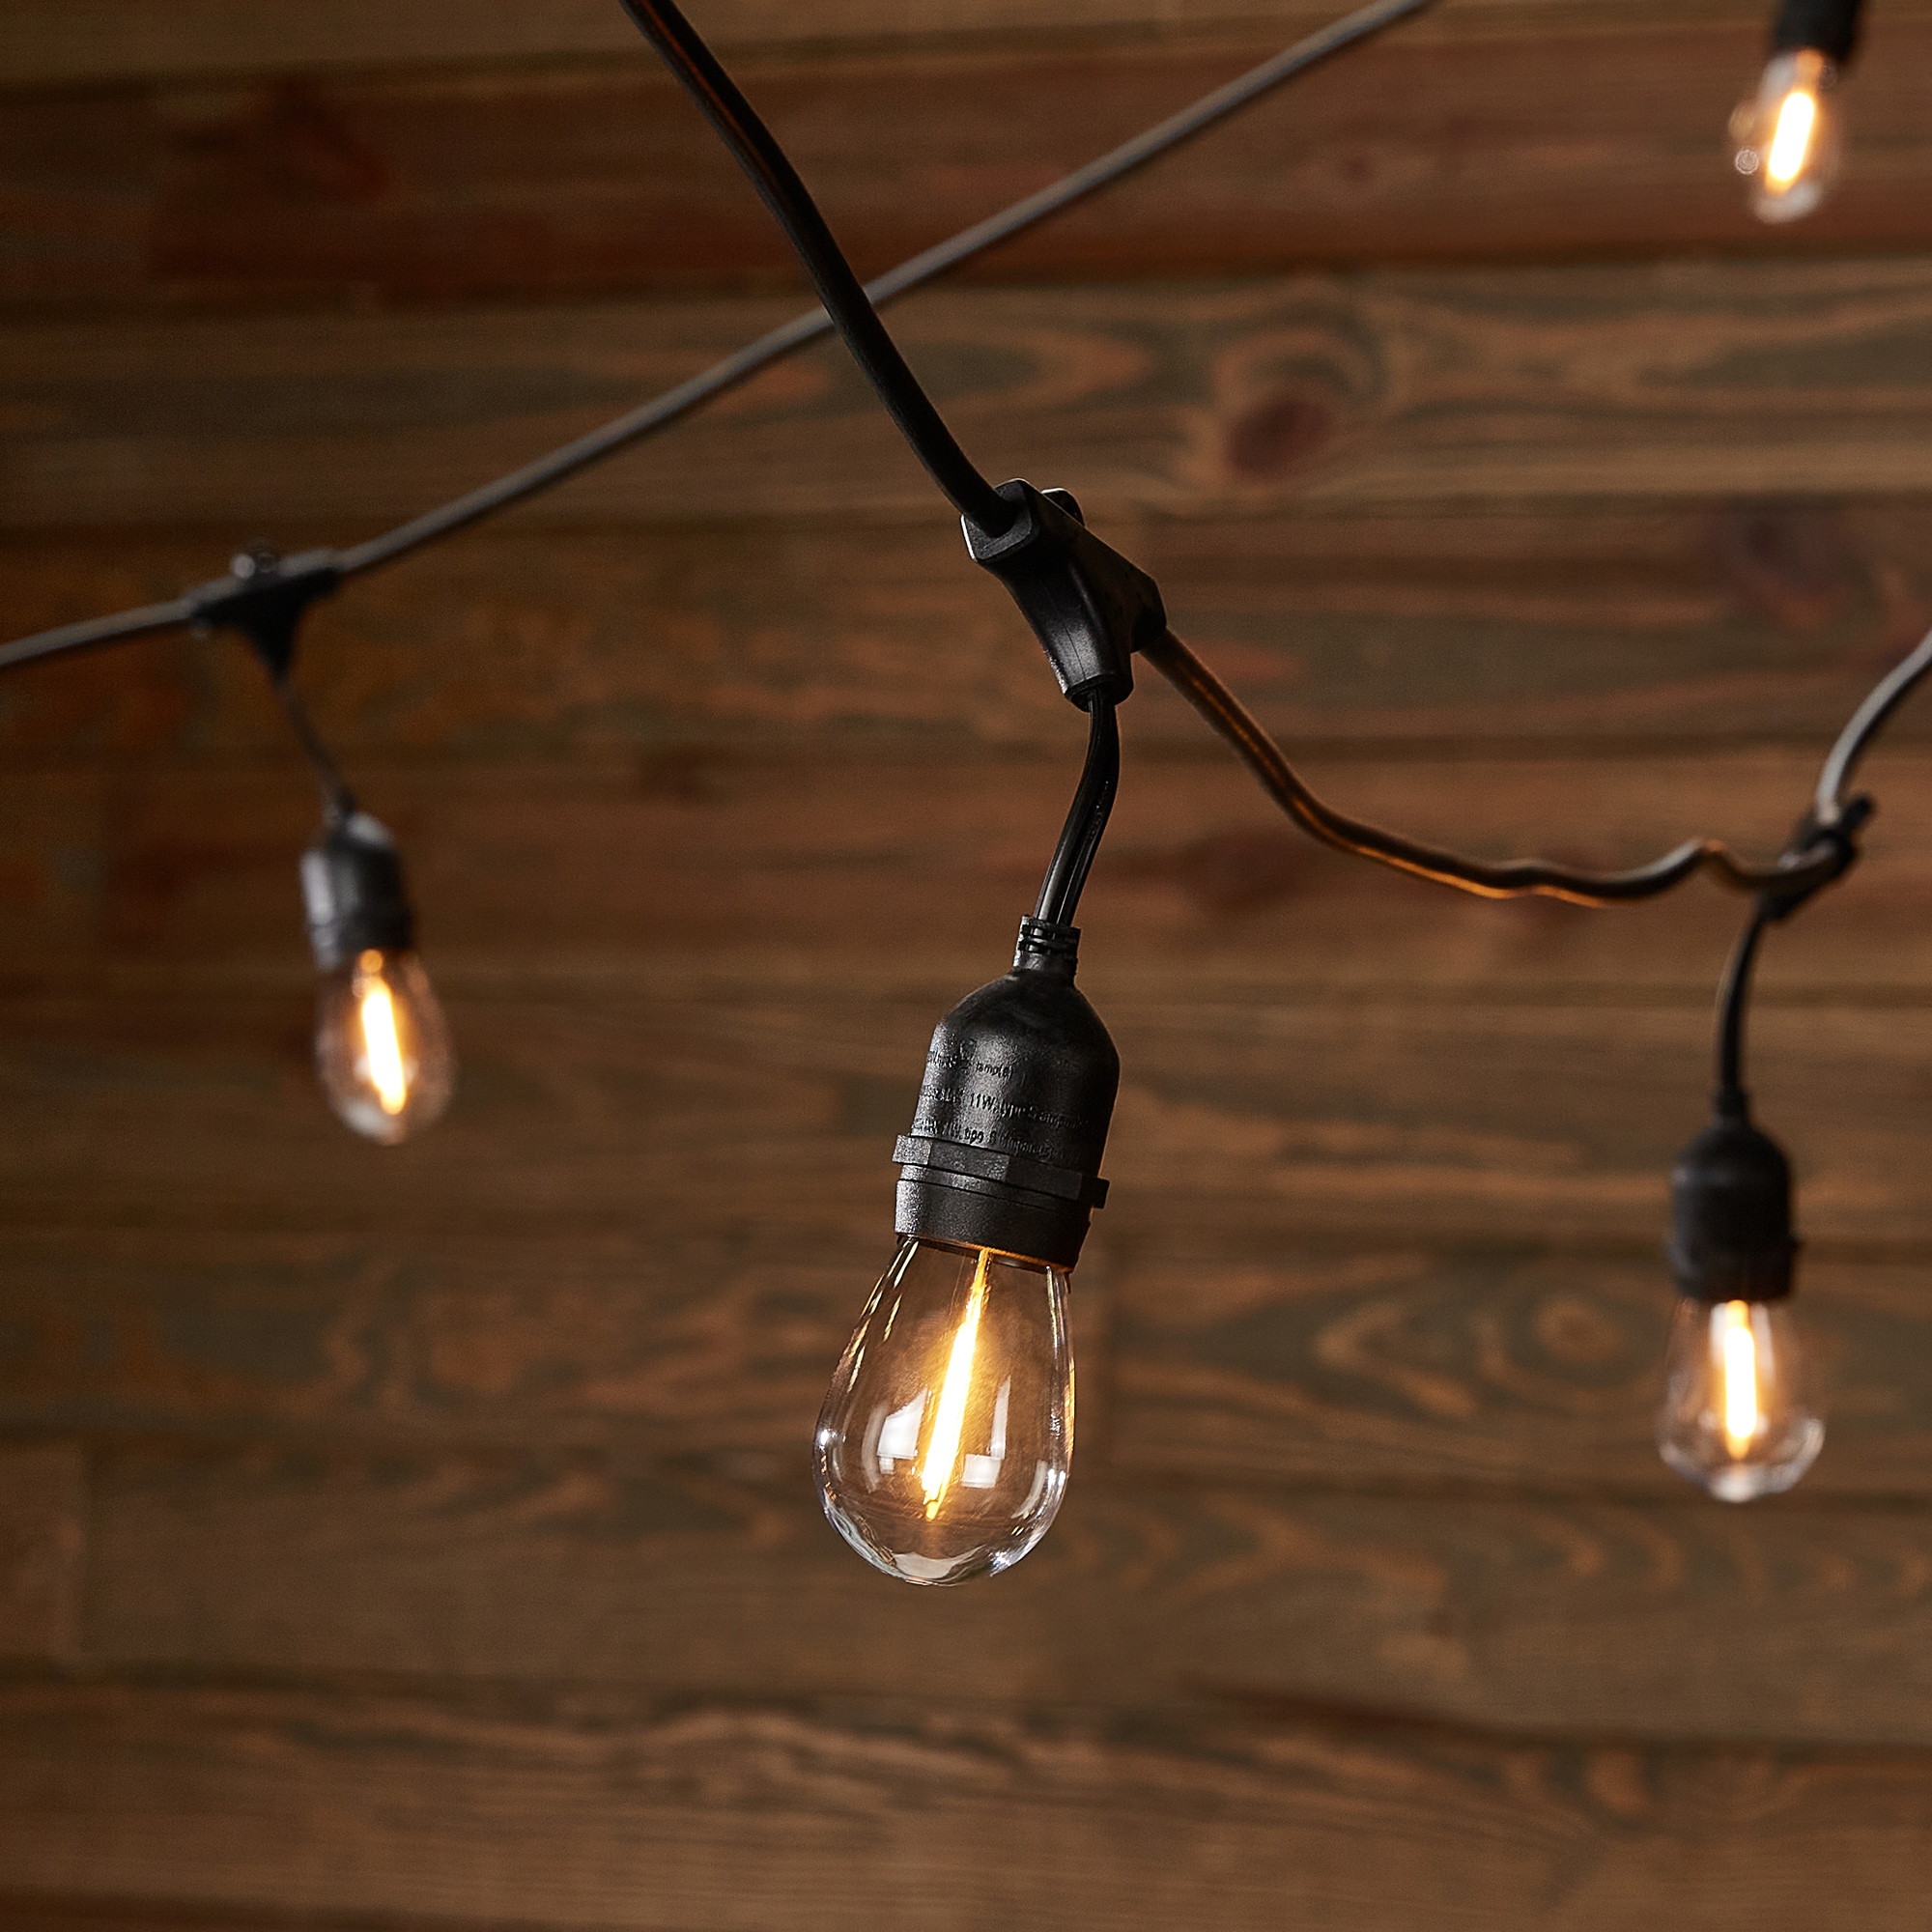 Harbor Breeze 48-ft Plug-in Black Outdoor String Light with 18 White-Light  LED Edison Bulbs